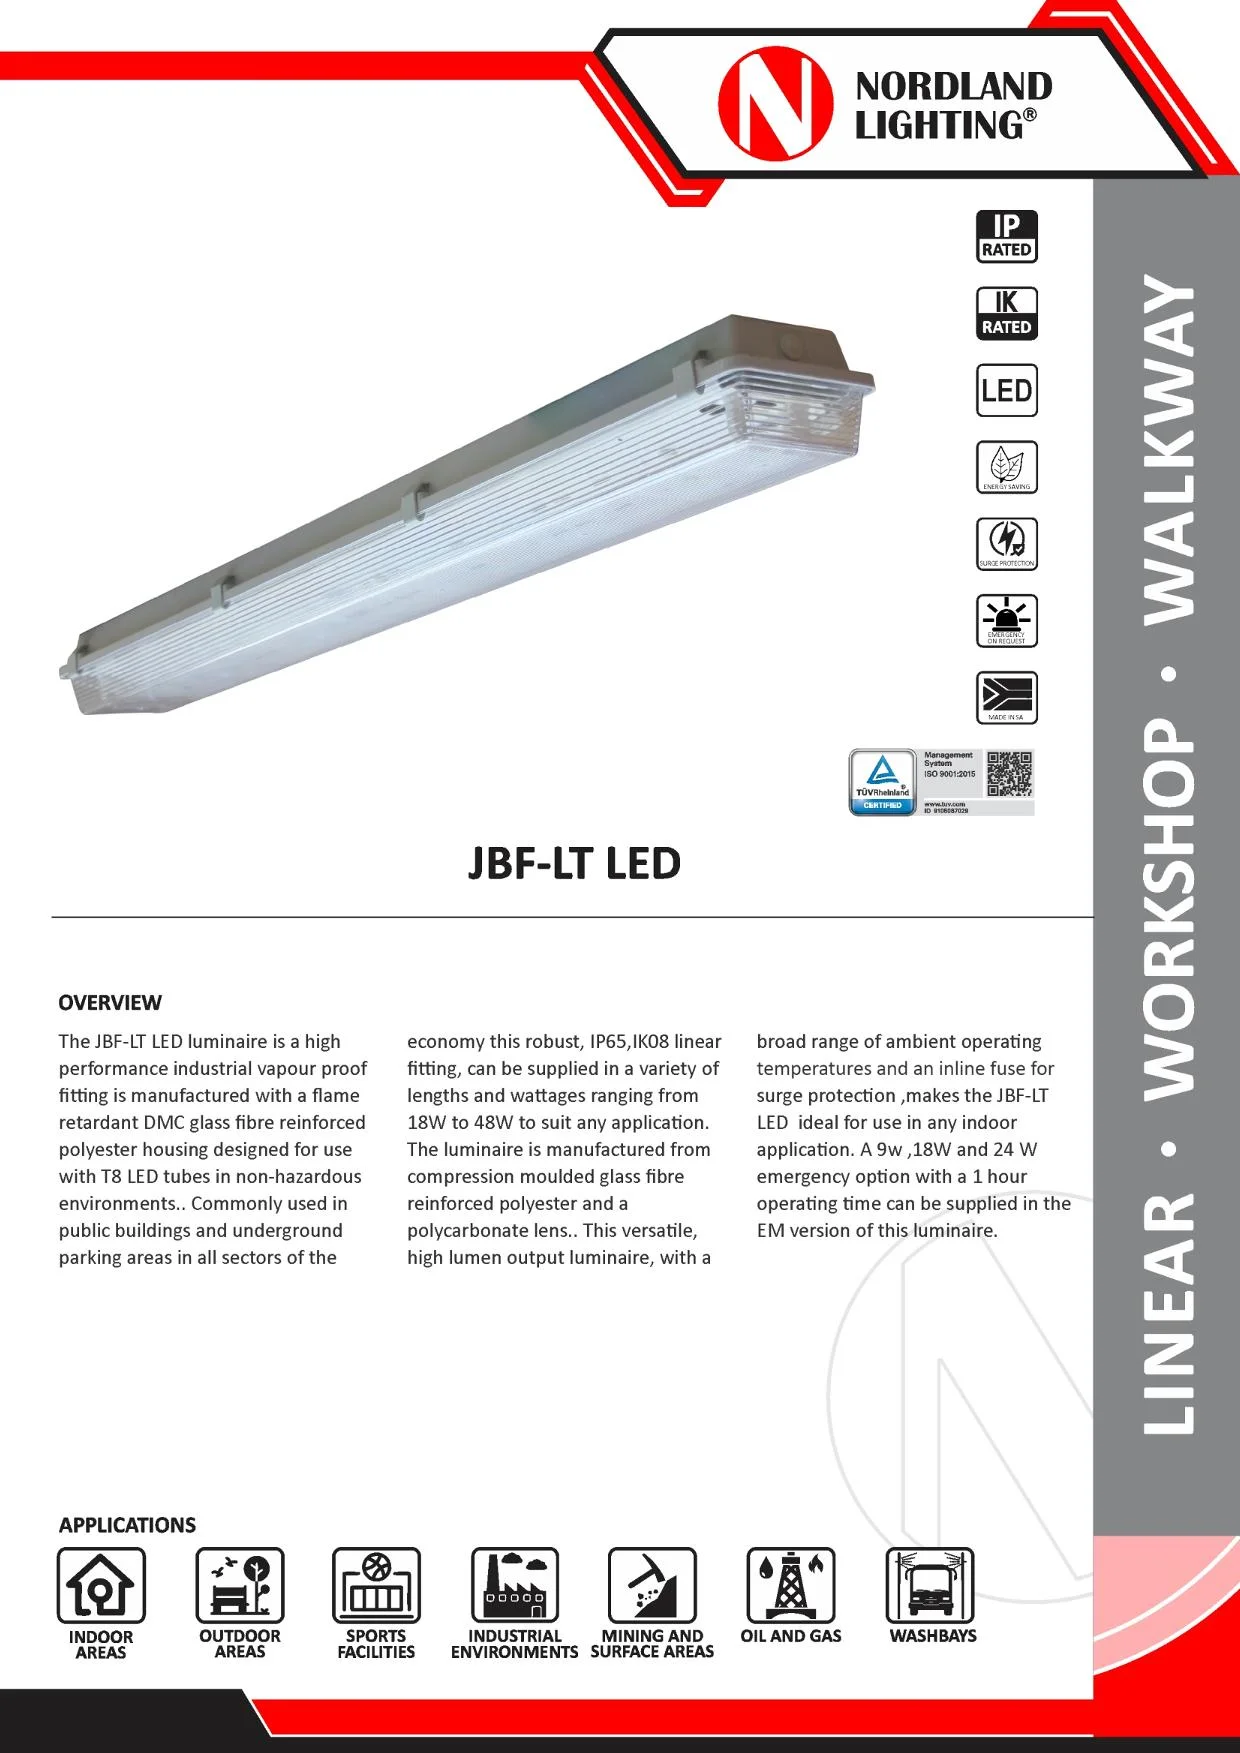 NL51 Nordland JBF-LT LED Industrial Vapour Proof Fitting